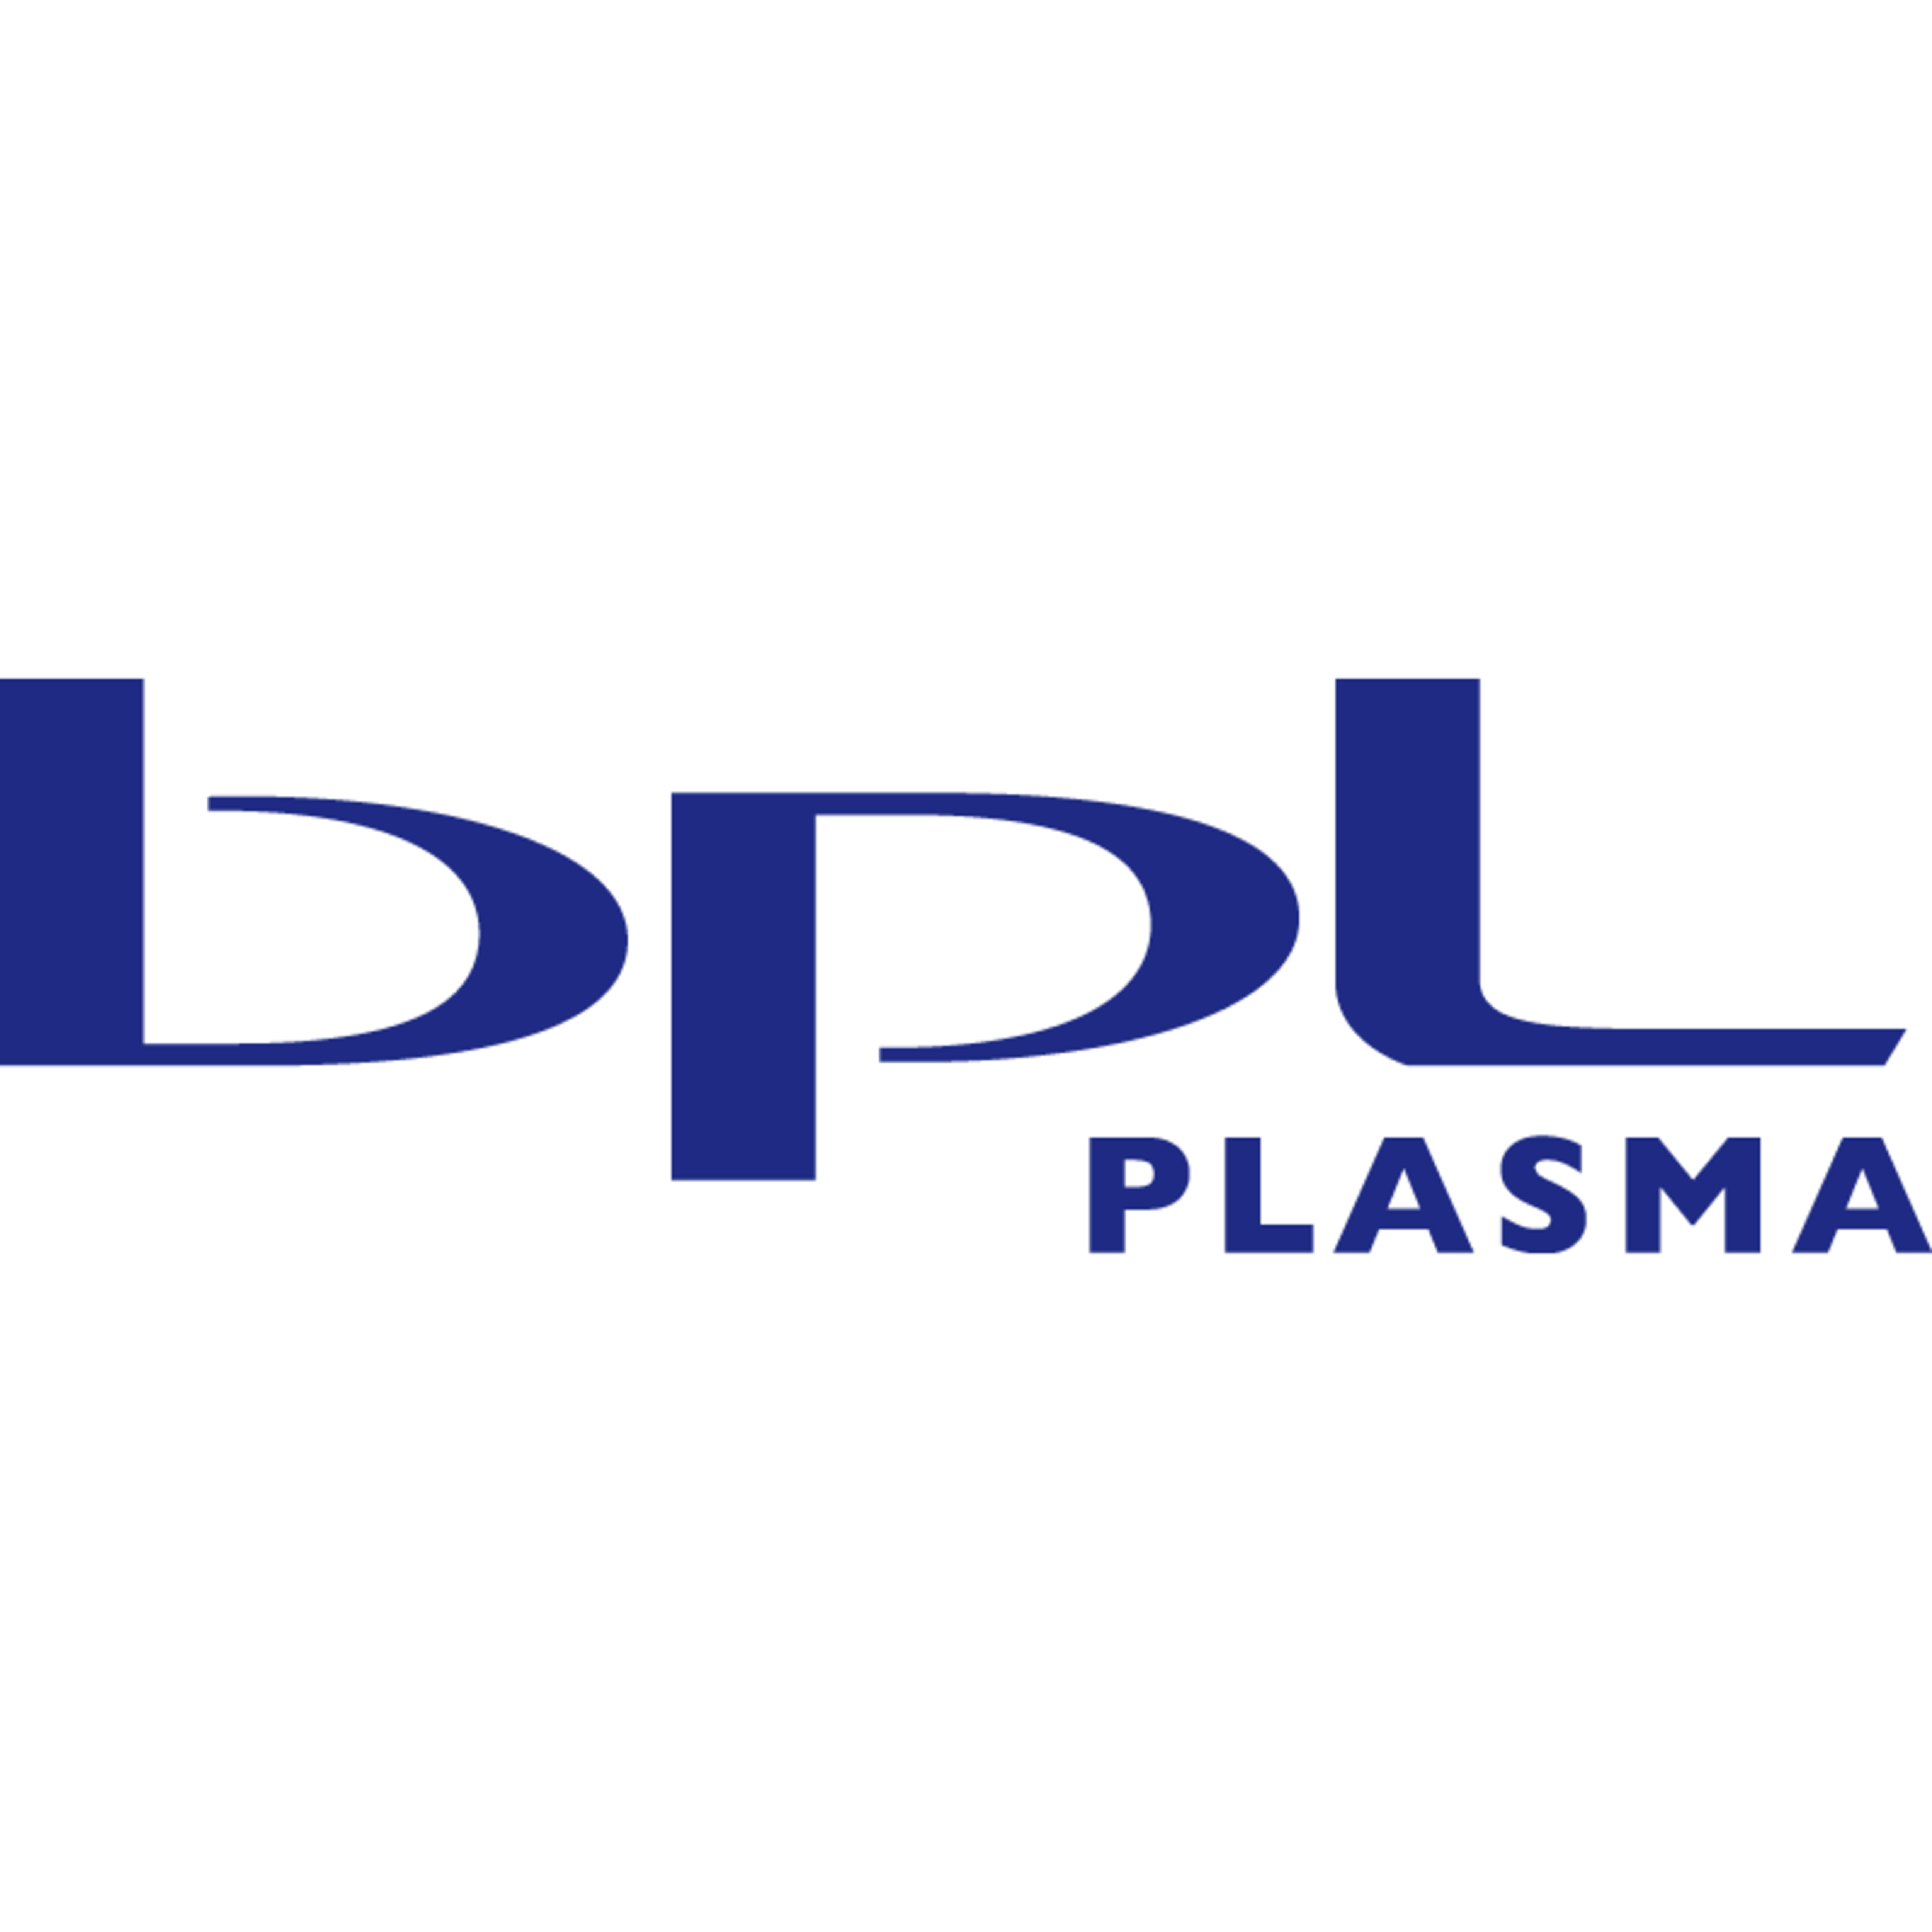 BPL Plasma Logo